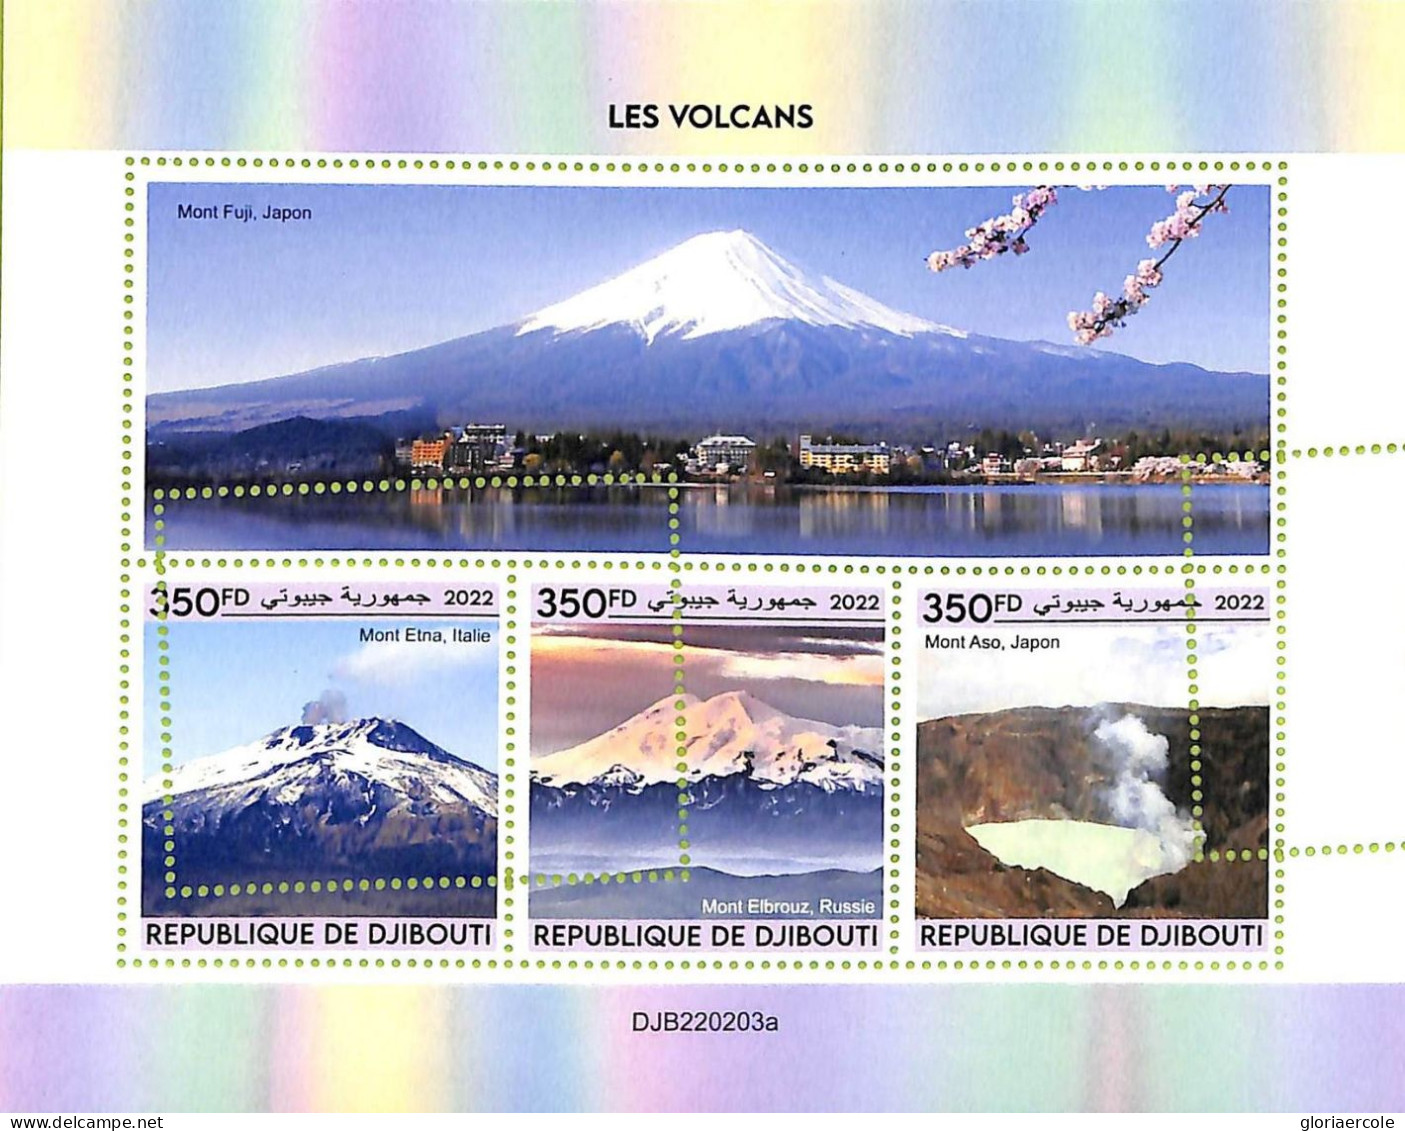 A7514 - DJIBOUTI - ERROR MISPERF Stamp Sheet - 2022 - Volcanoes - Volcanos